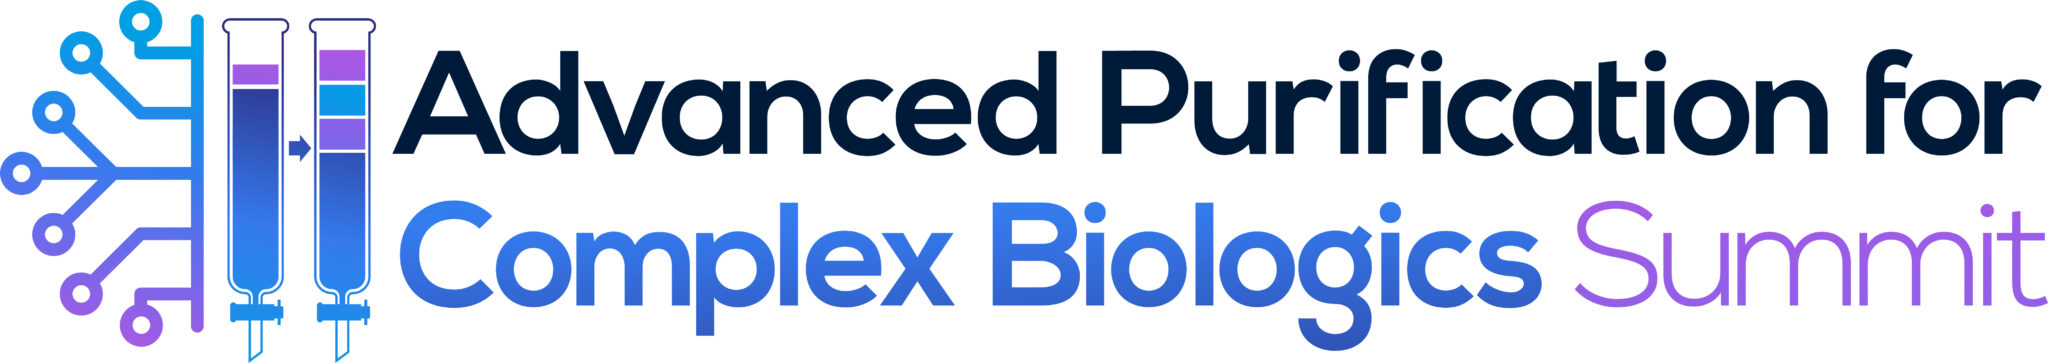 32314-Advanced-Purification-for-Complex-Biologics-logo-2048x363